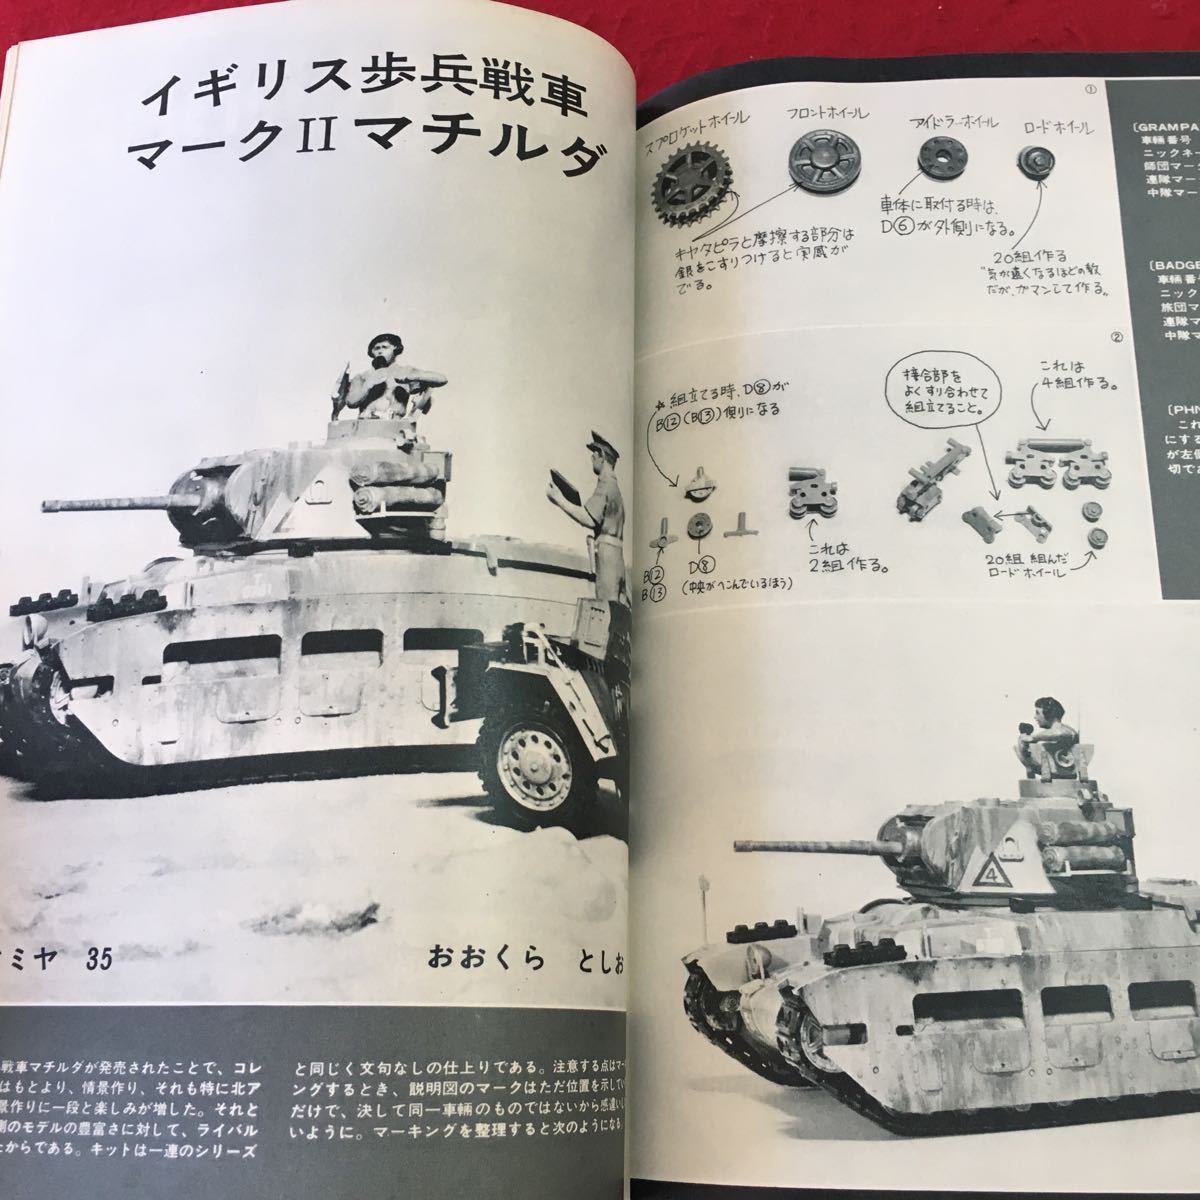 S7i-260 モデルアート 1973年8月号 付録付き 昭和48年8月1日 発行 雑誌 ミリタリー 戦車 飛行機 戦闘機 水上機 陸上機 マチルダ F4F FM-2_画像5